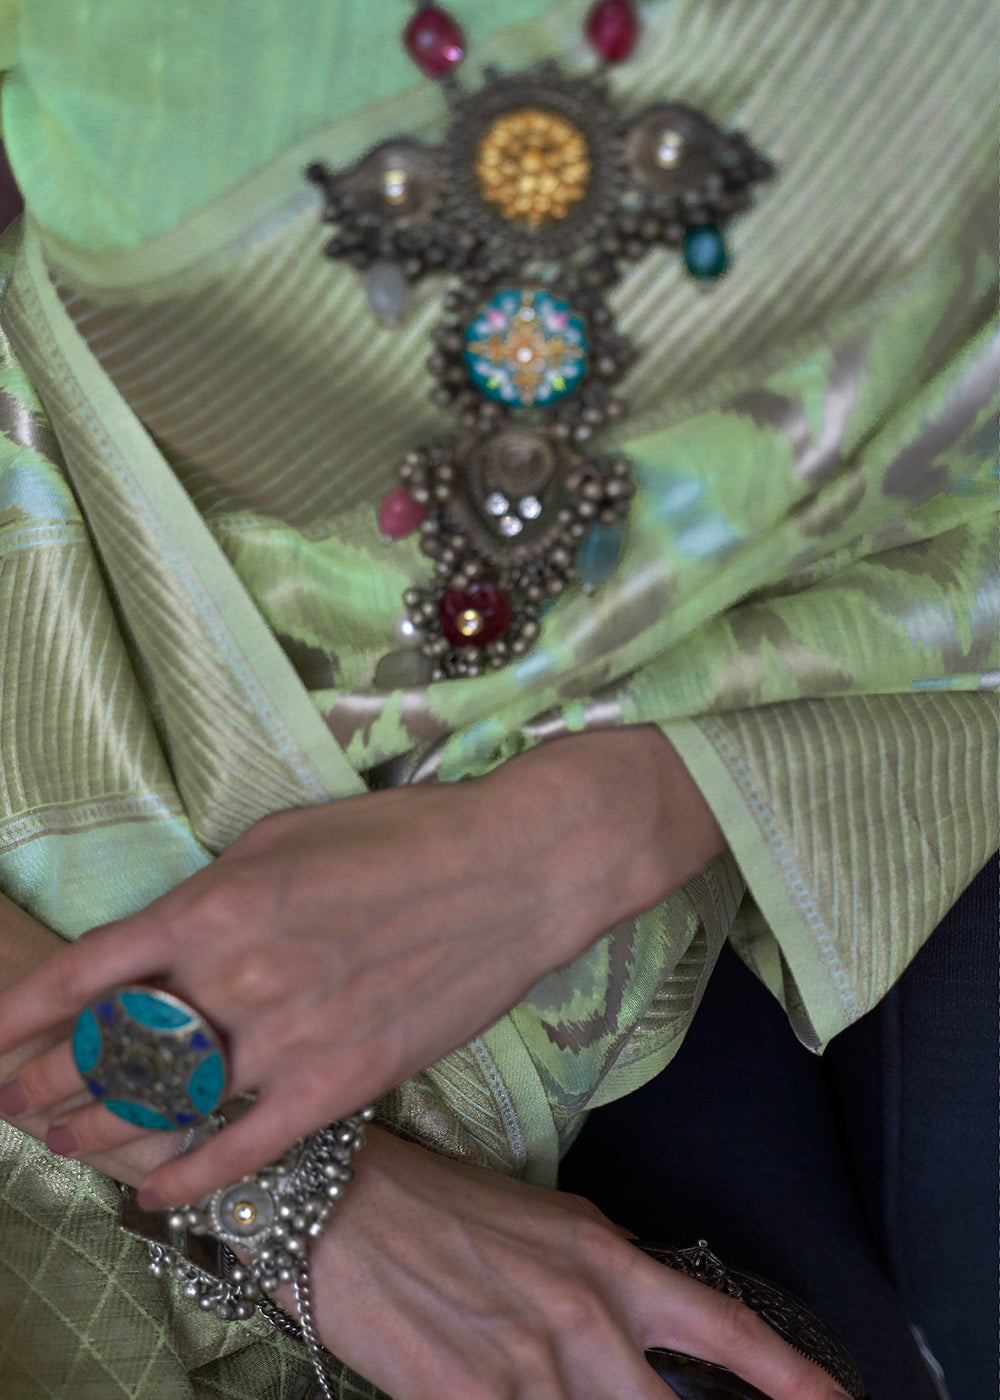 Shop Now Astonishing Pastel Green Zari Weaving Linen Designer Saree from Empress Clothing in USA, UK, Canada & Worldwide. 